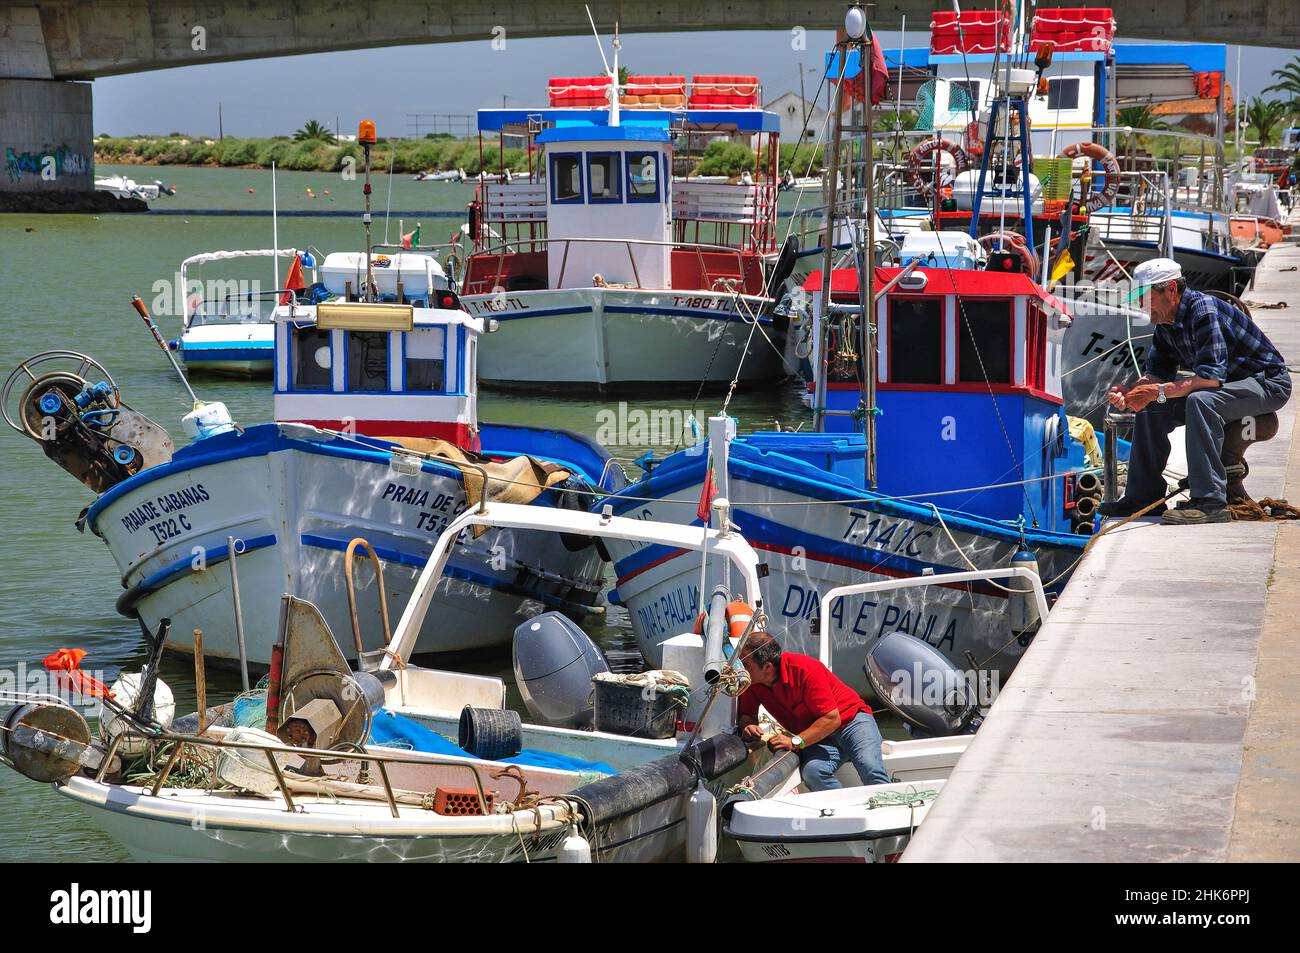 Fishing boats on River Gilao, Tavira, Algarve Region, Portugal Stock Photo